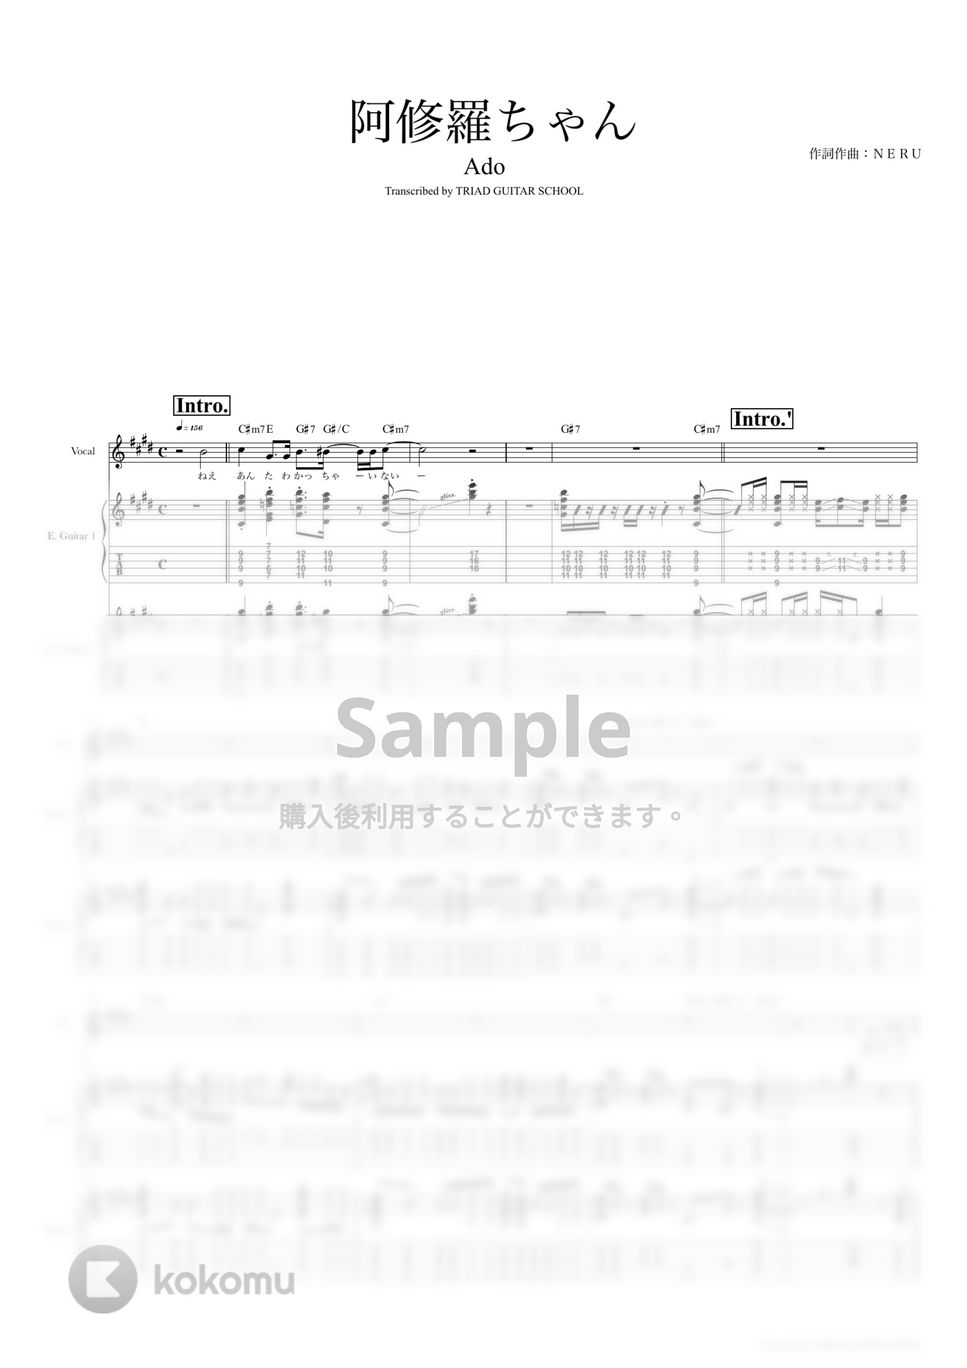 Ado - 阿修羅ちゃん (ギタースコア・歌詞・コード付き) by TRIAD GUITAR SCHOOL